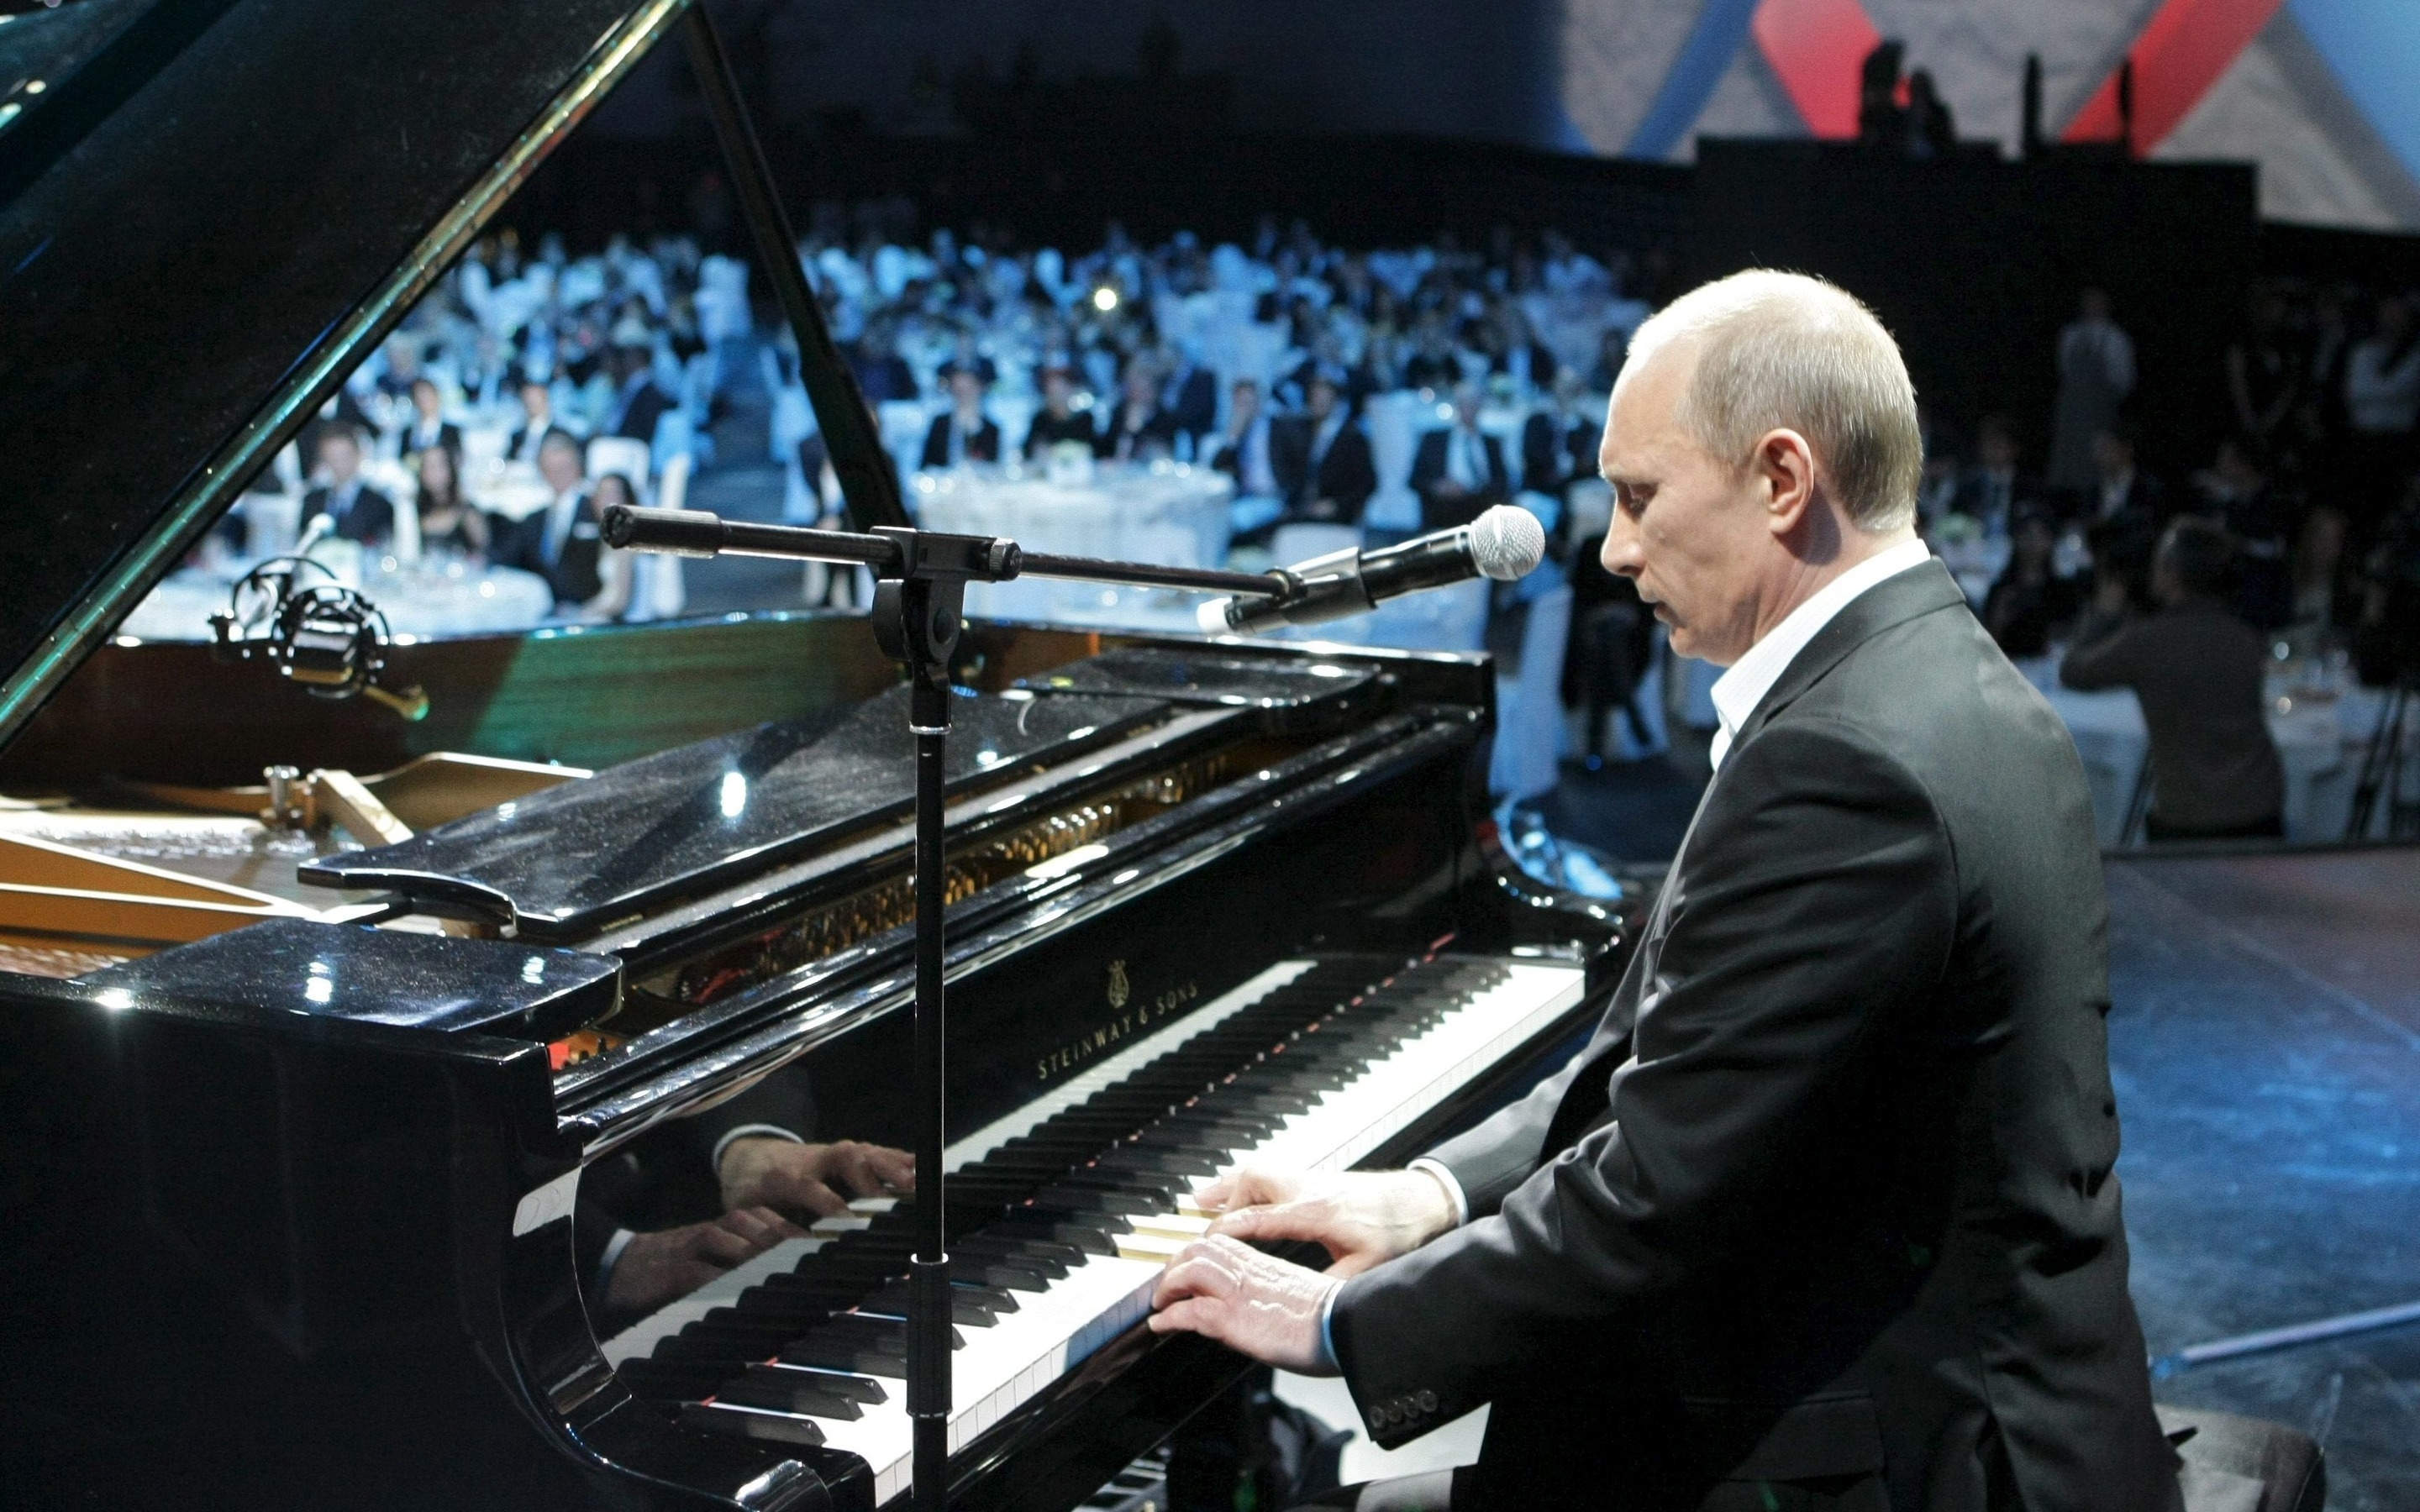 Vladimir Putin Playing Piano for 2880 x 1800 Retina Display resolution